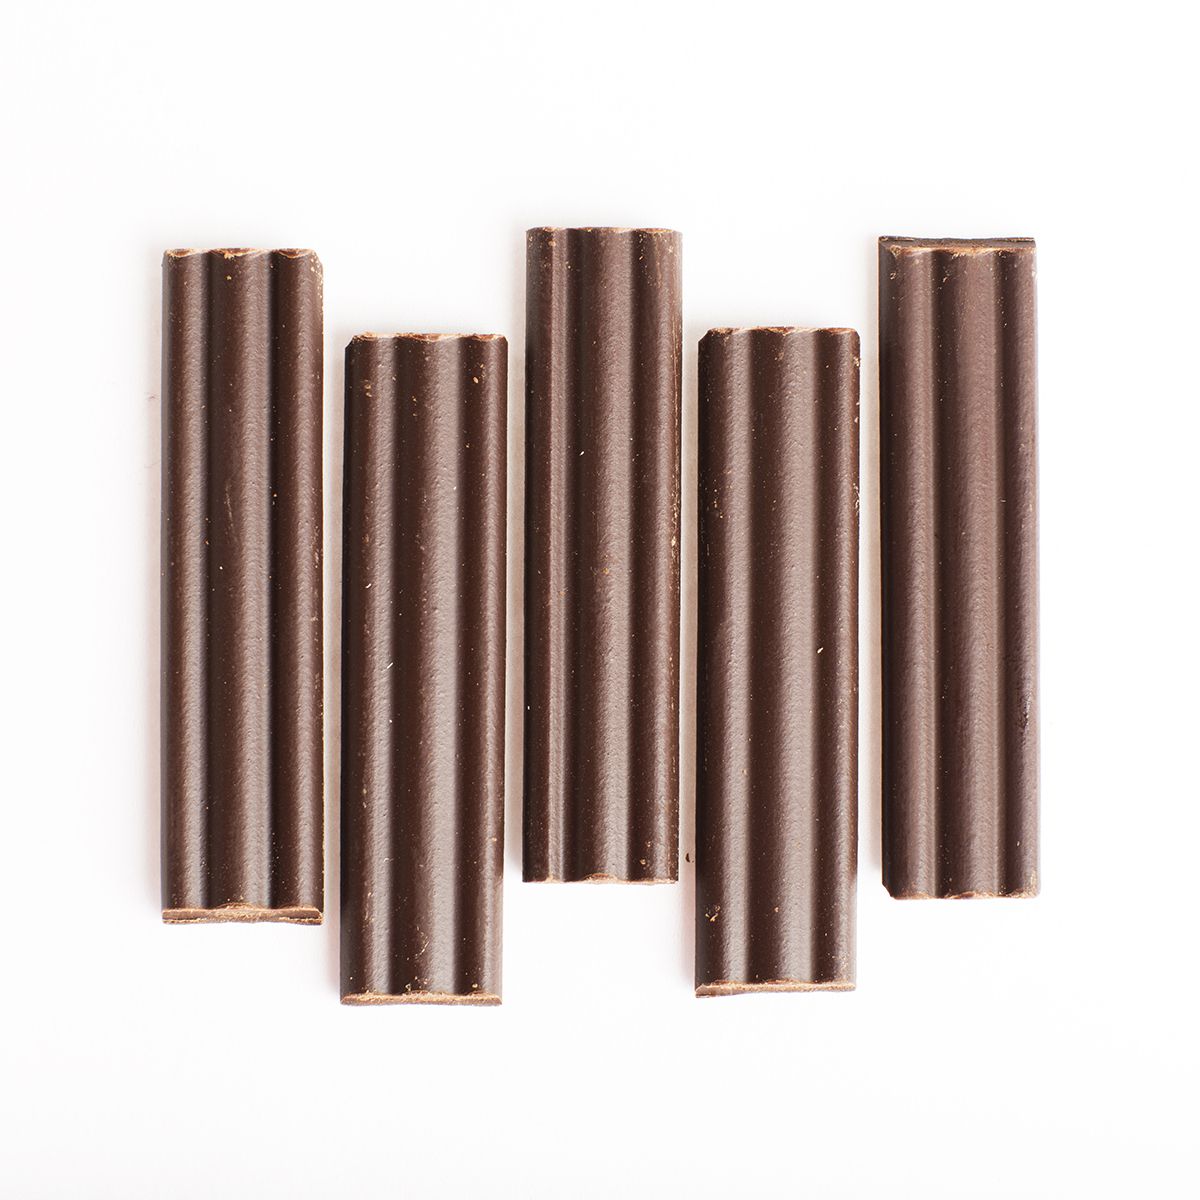 Dgf Large Chocolate Batons 10 GR 165 CT